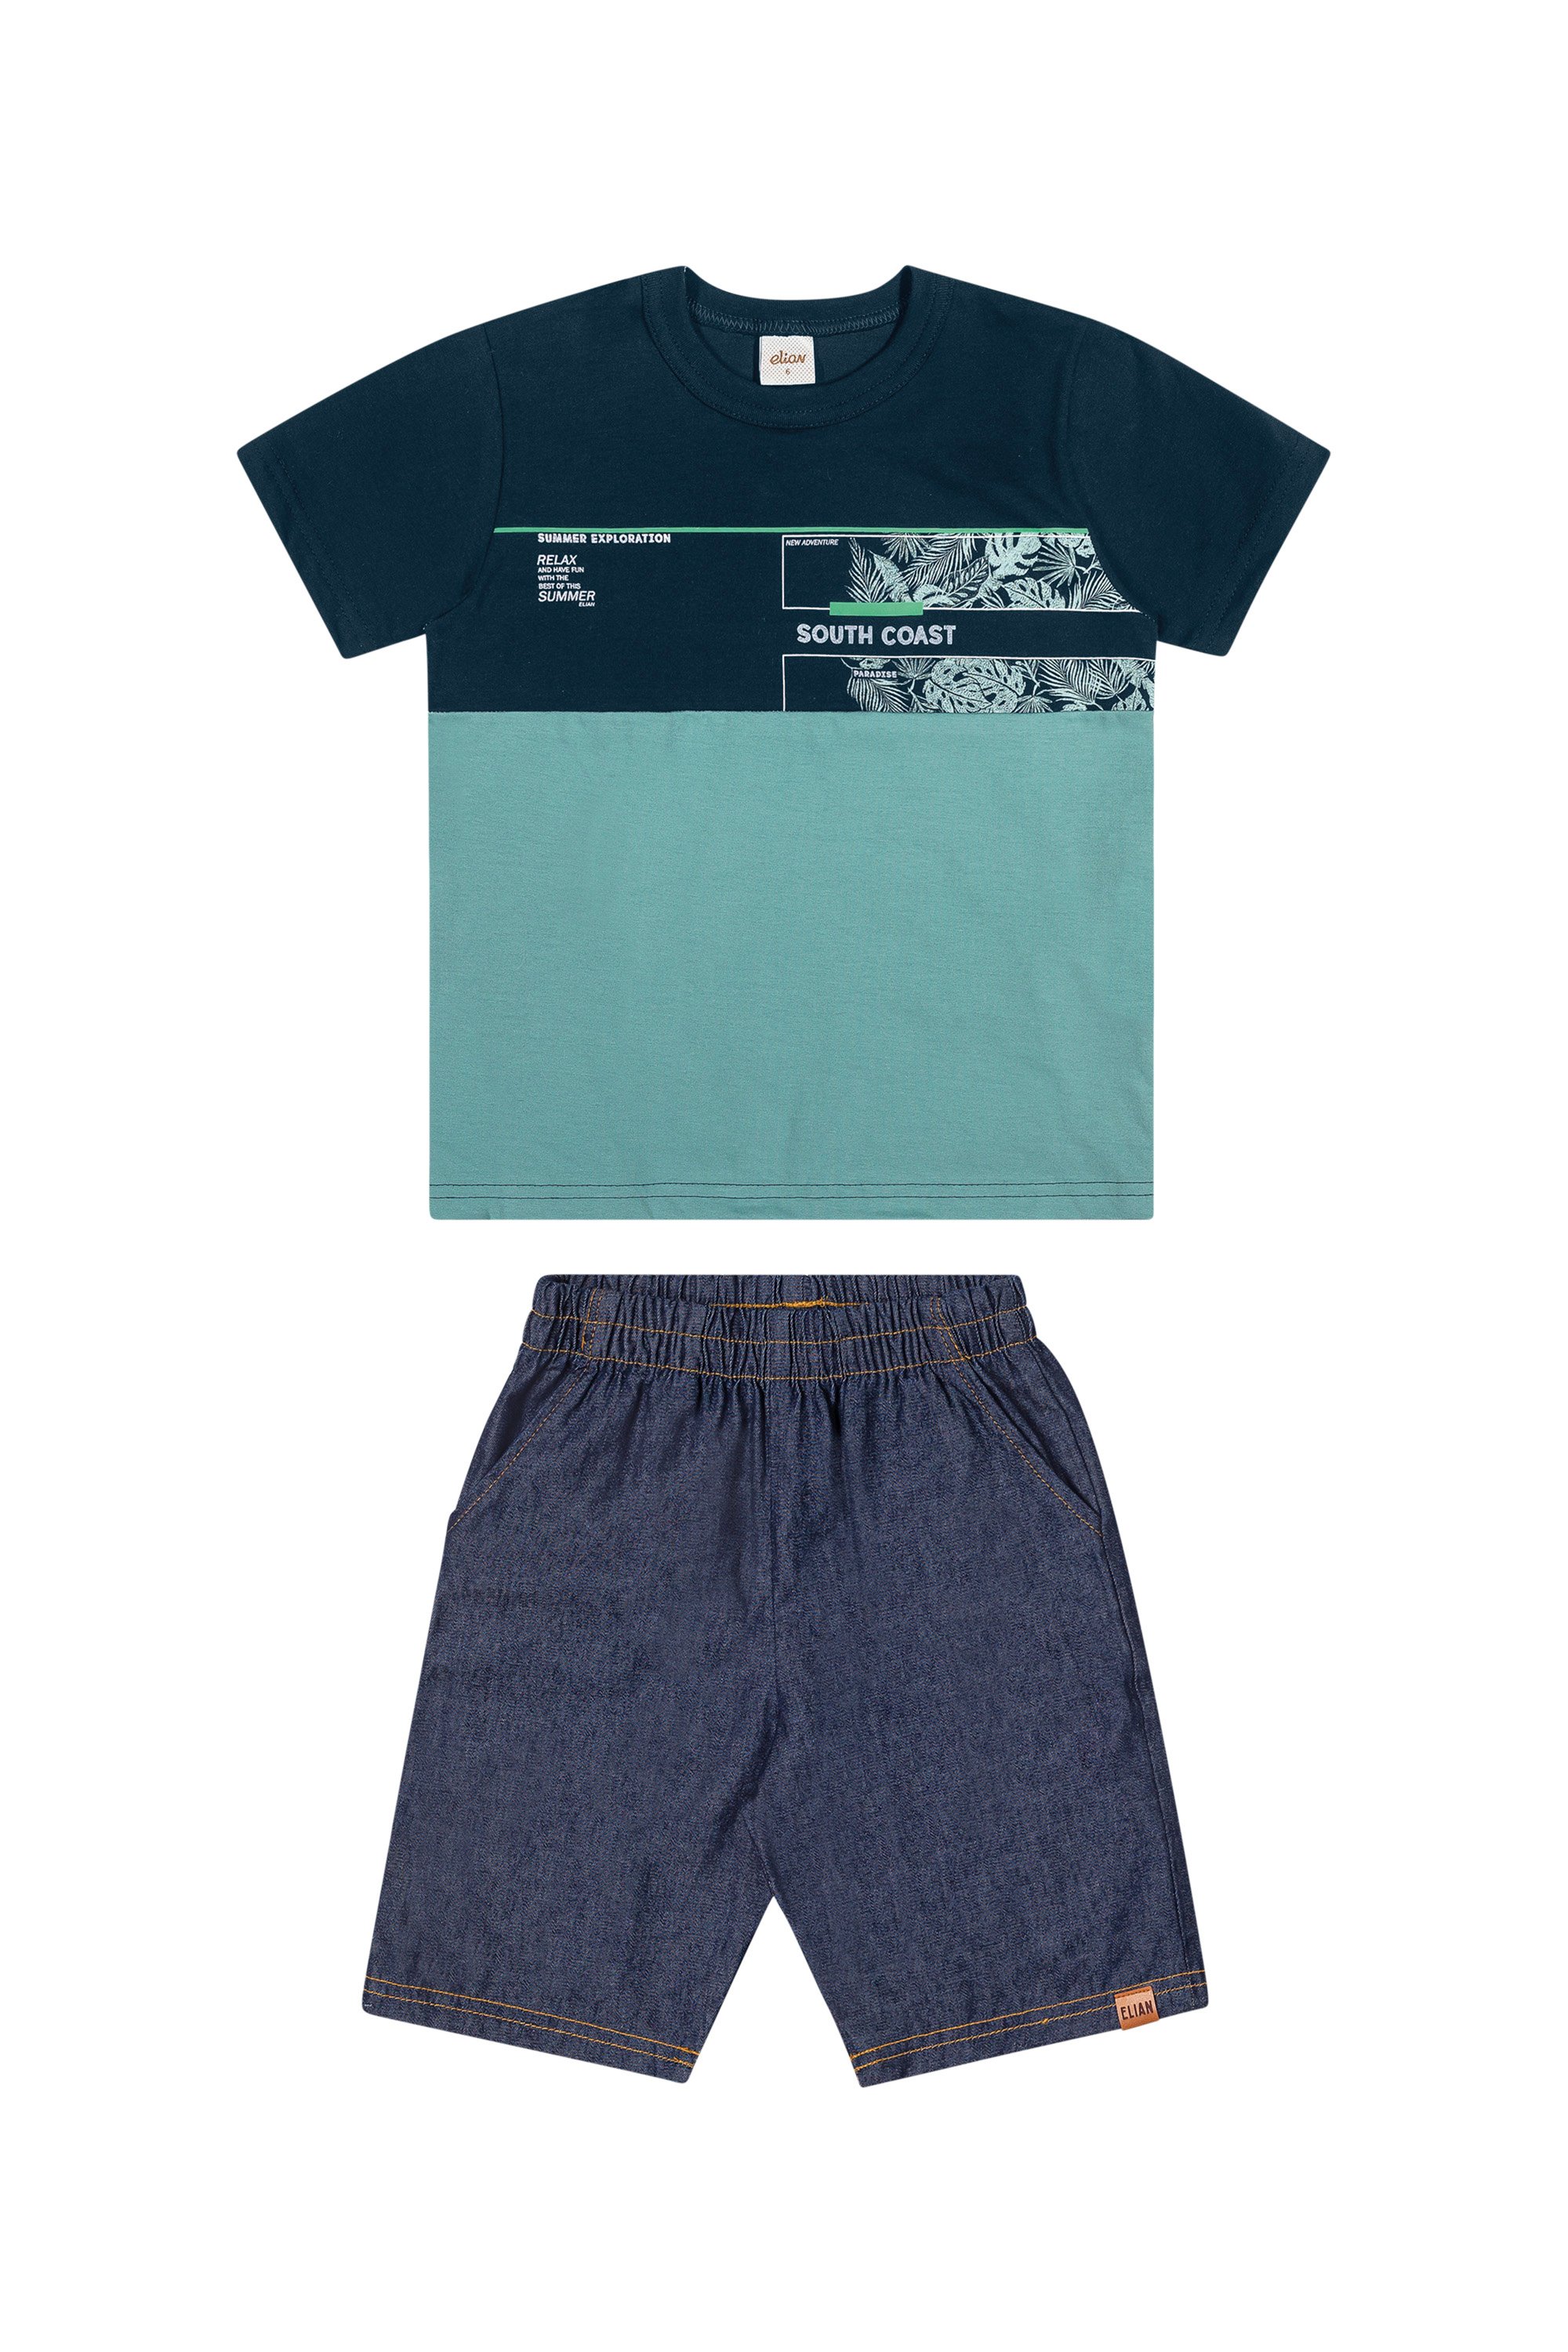 Conjunto Camiseta e Bermuda South Coast - Elian